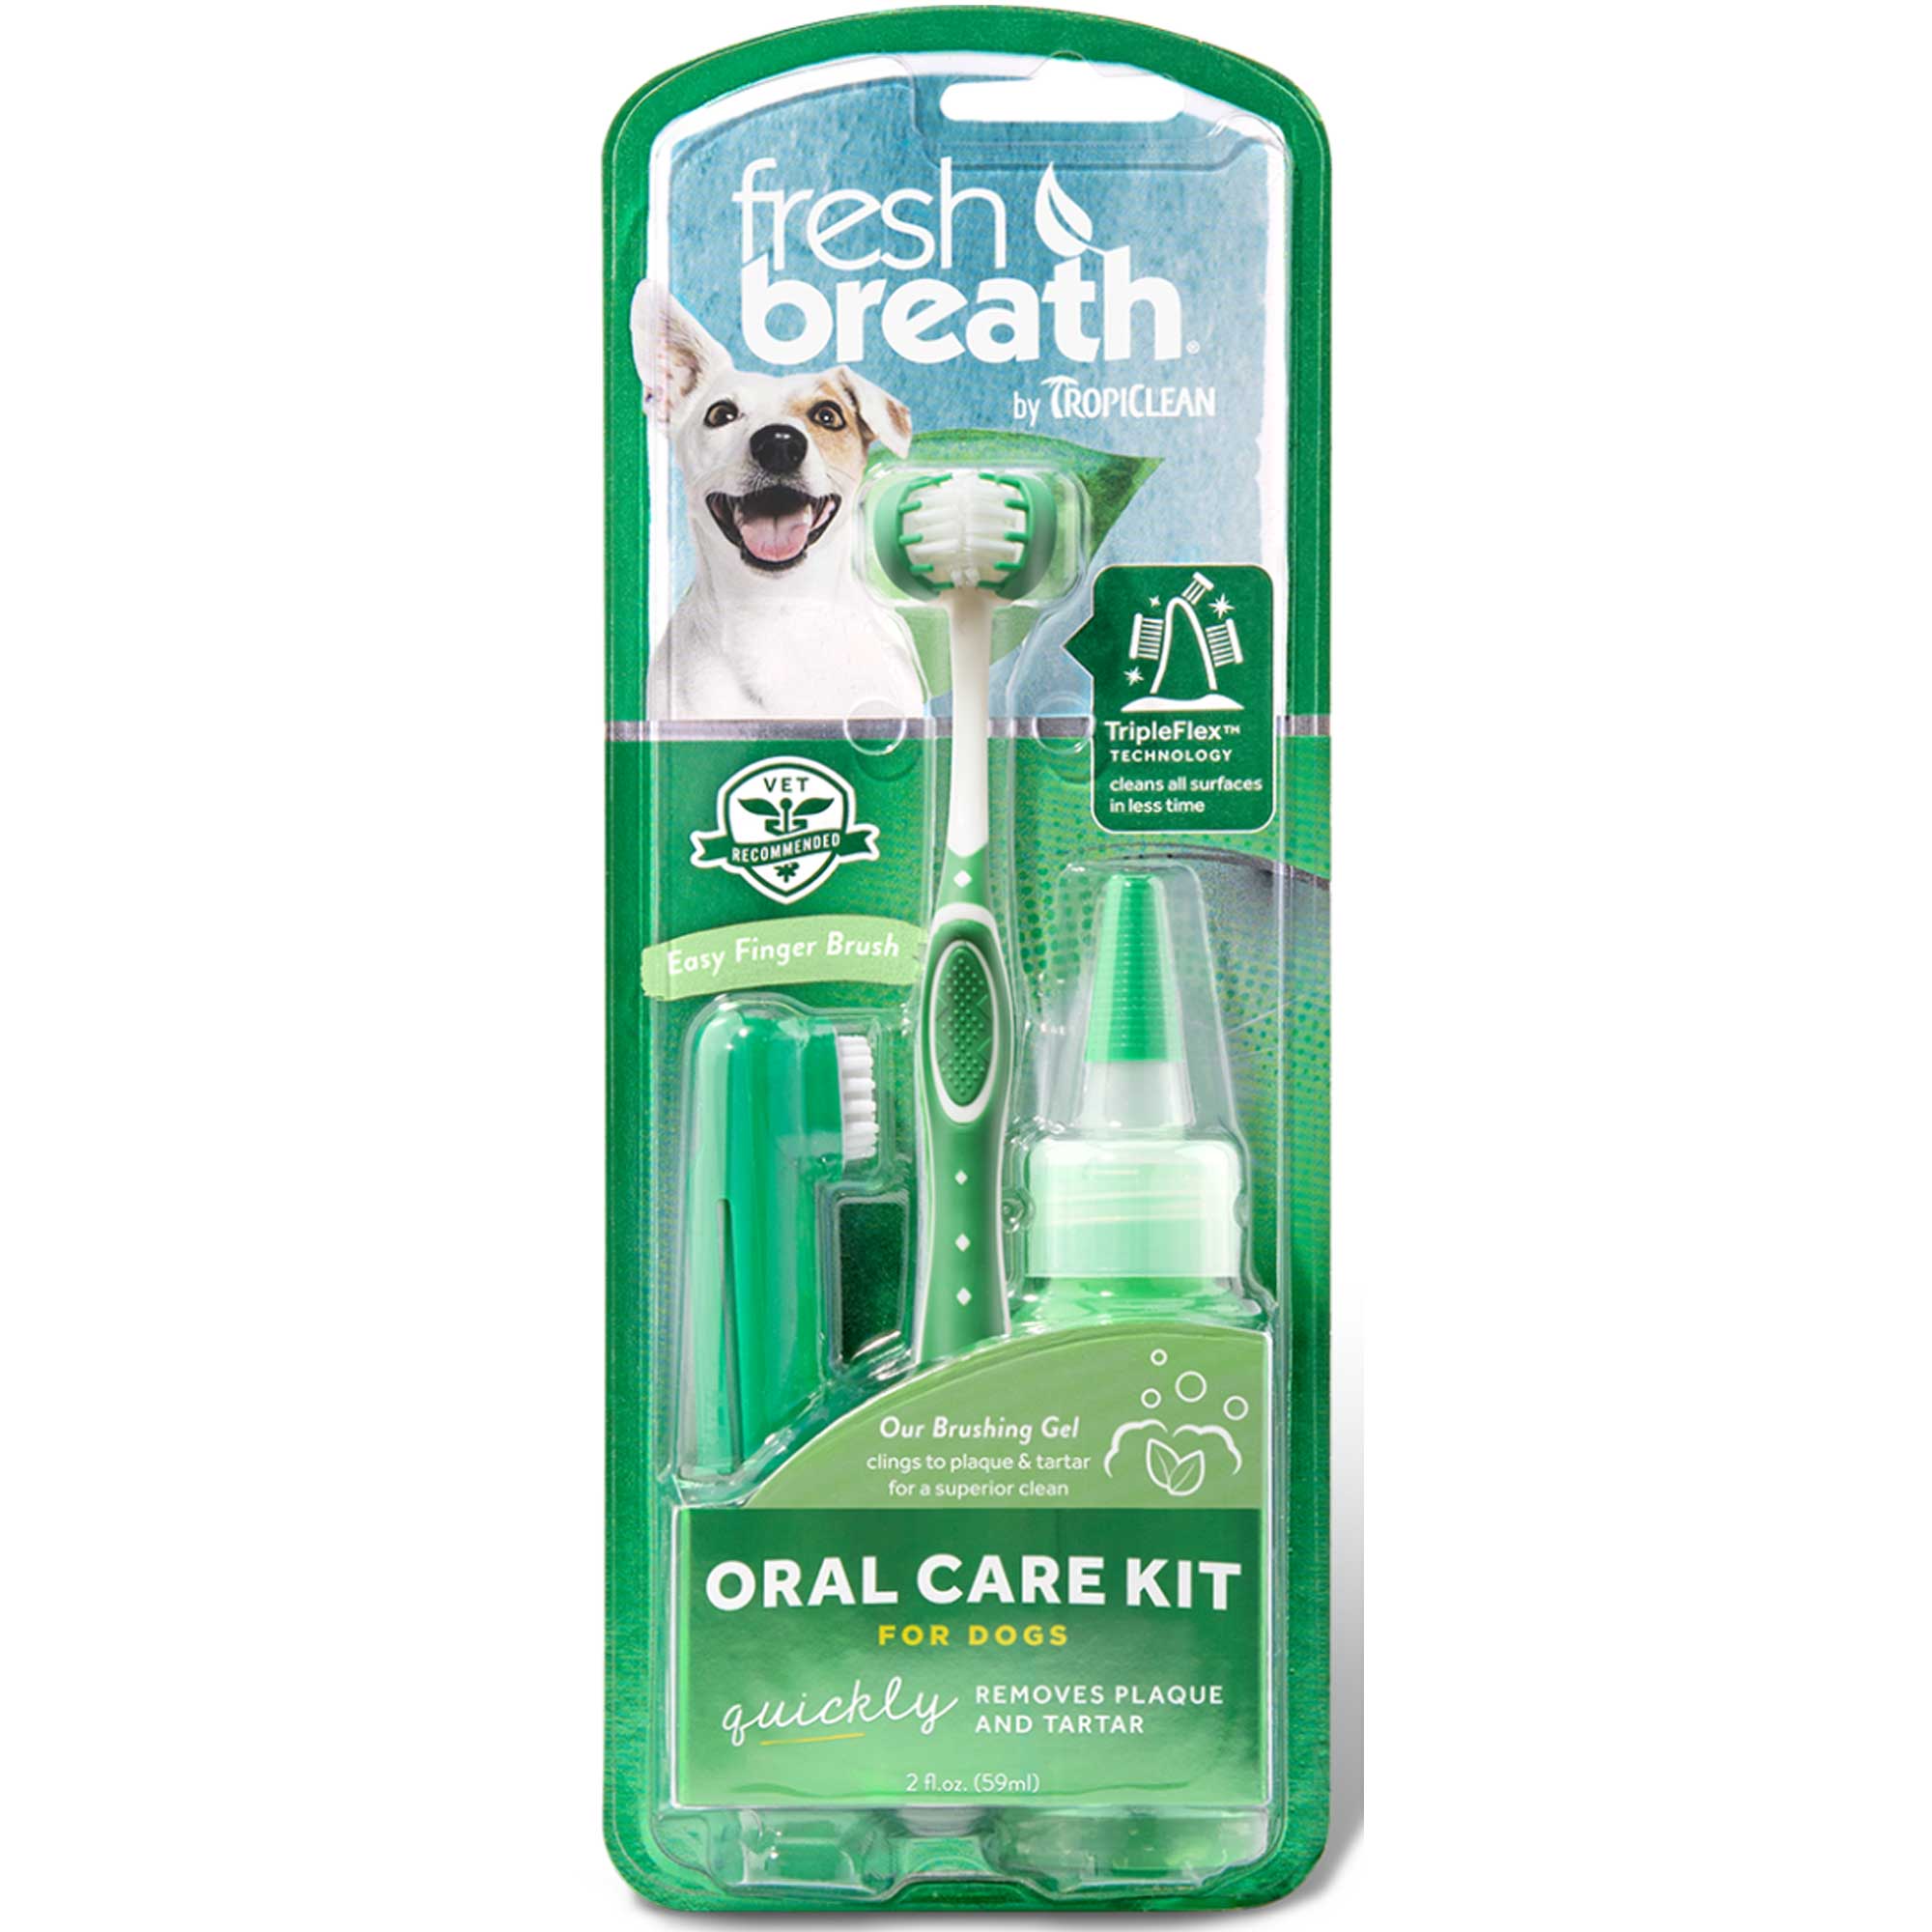 Tropiclean Fresh Breath Oral Care Kit Usage